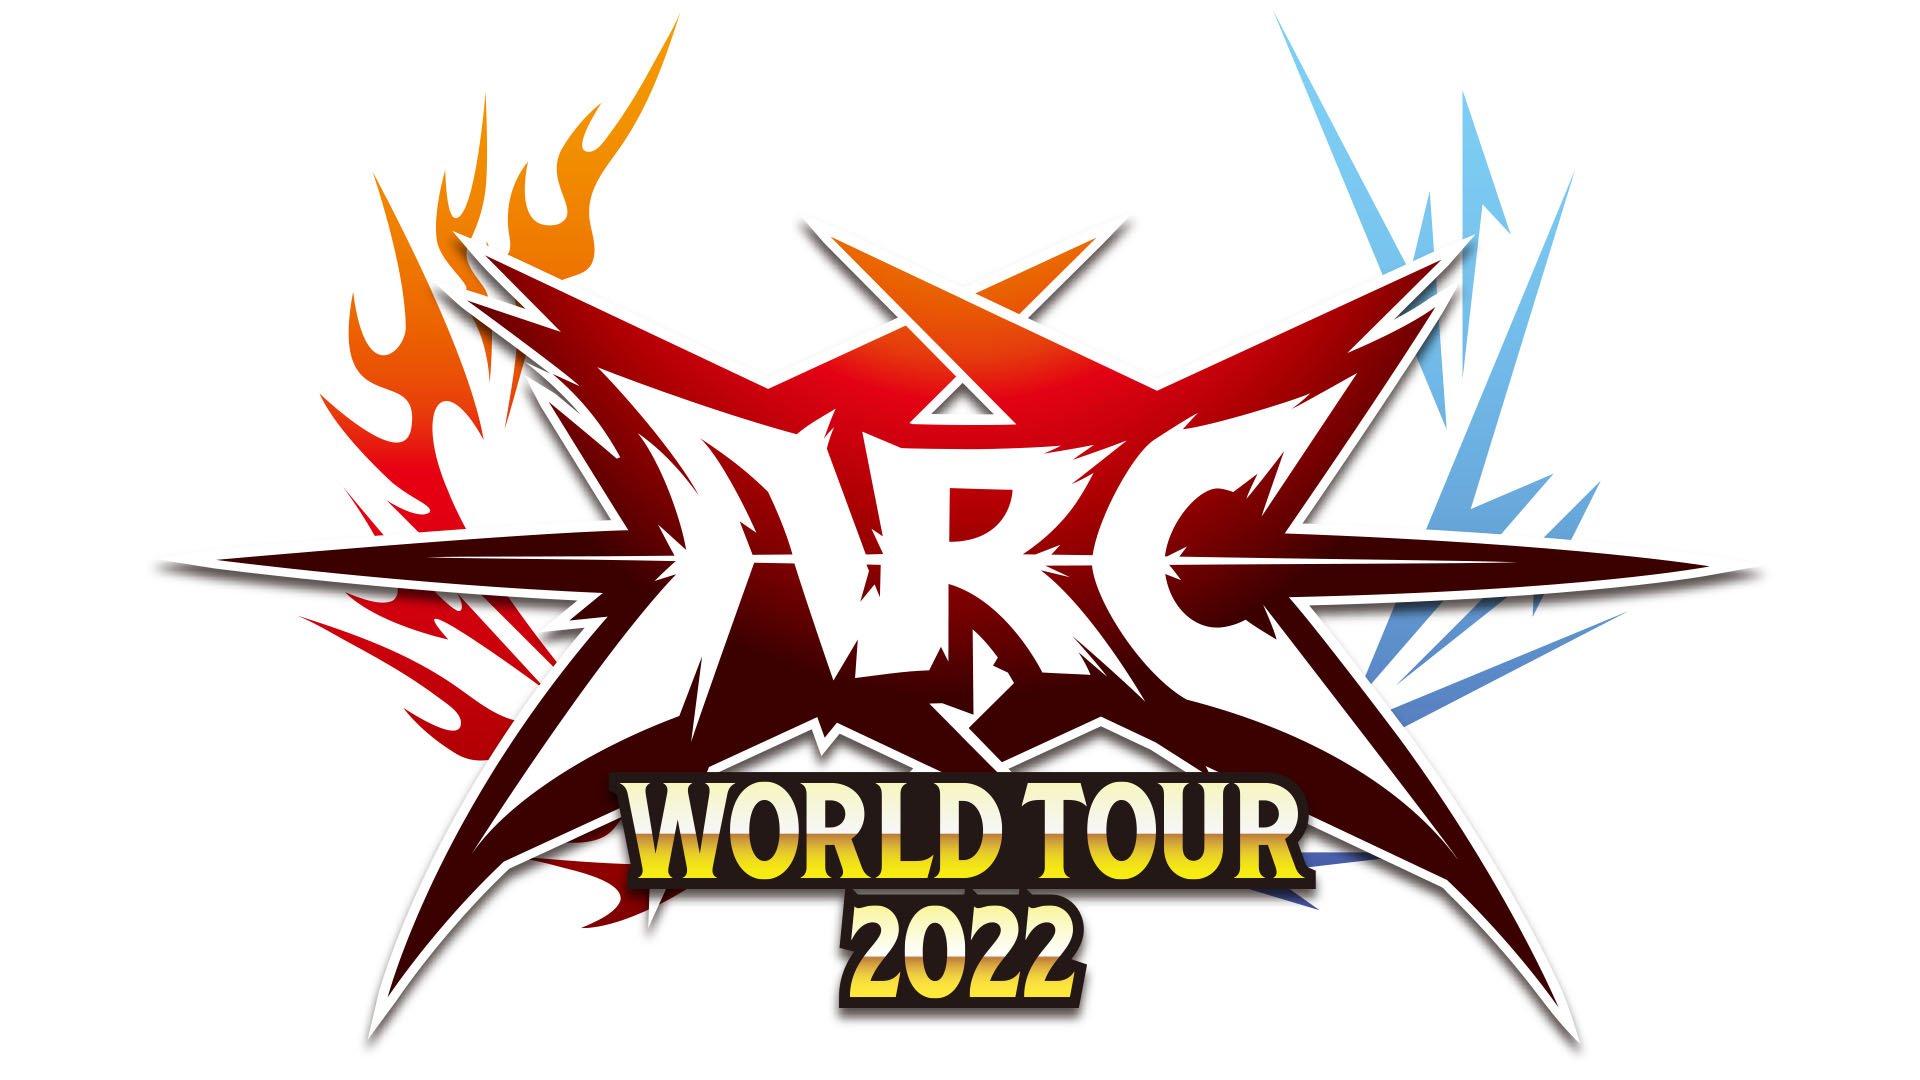 #
      Arc World Tour 2022 announced